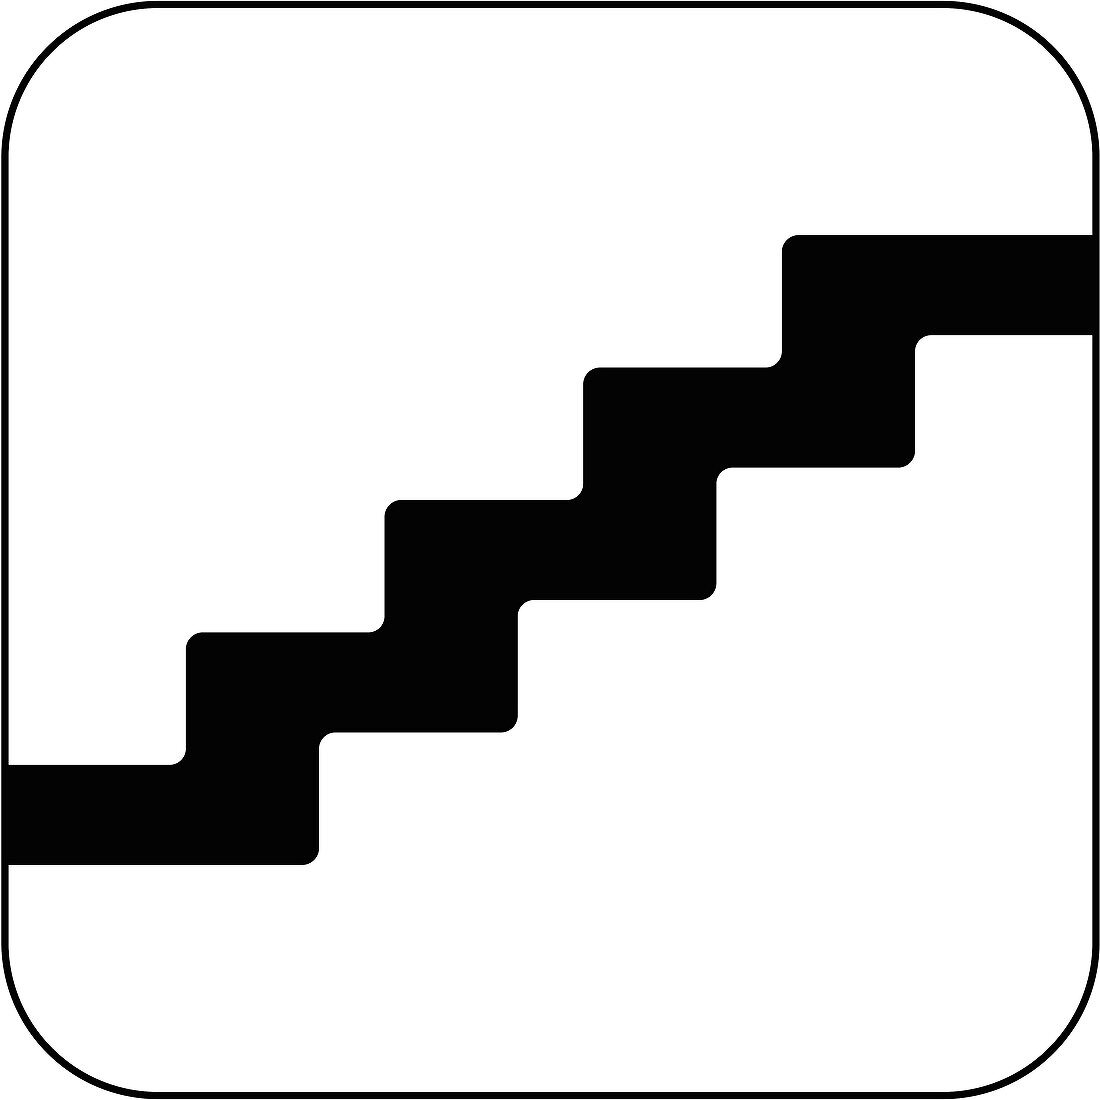 Stairs symbol,artwork